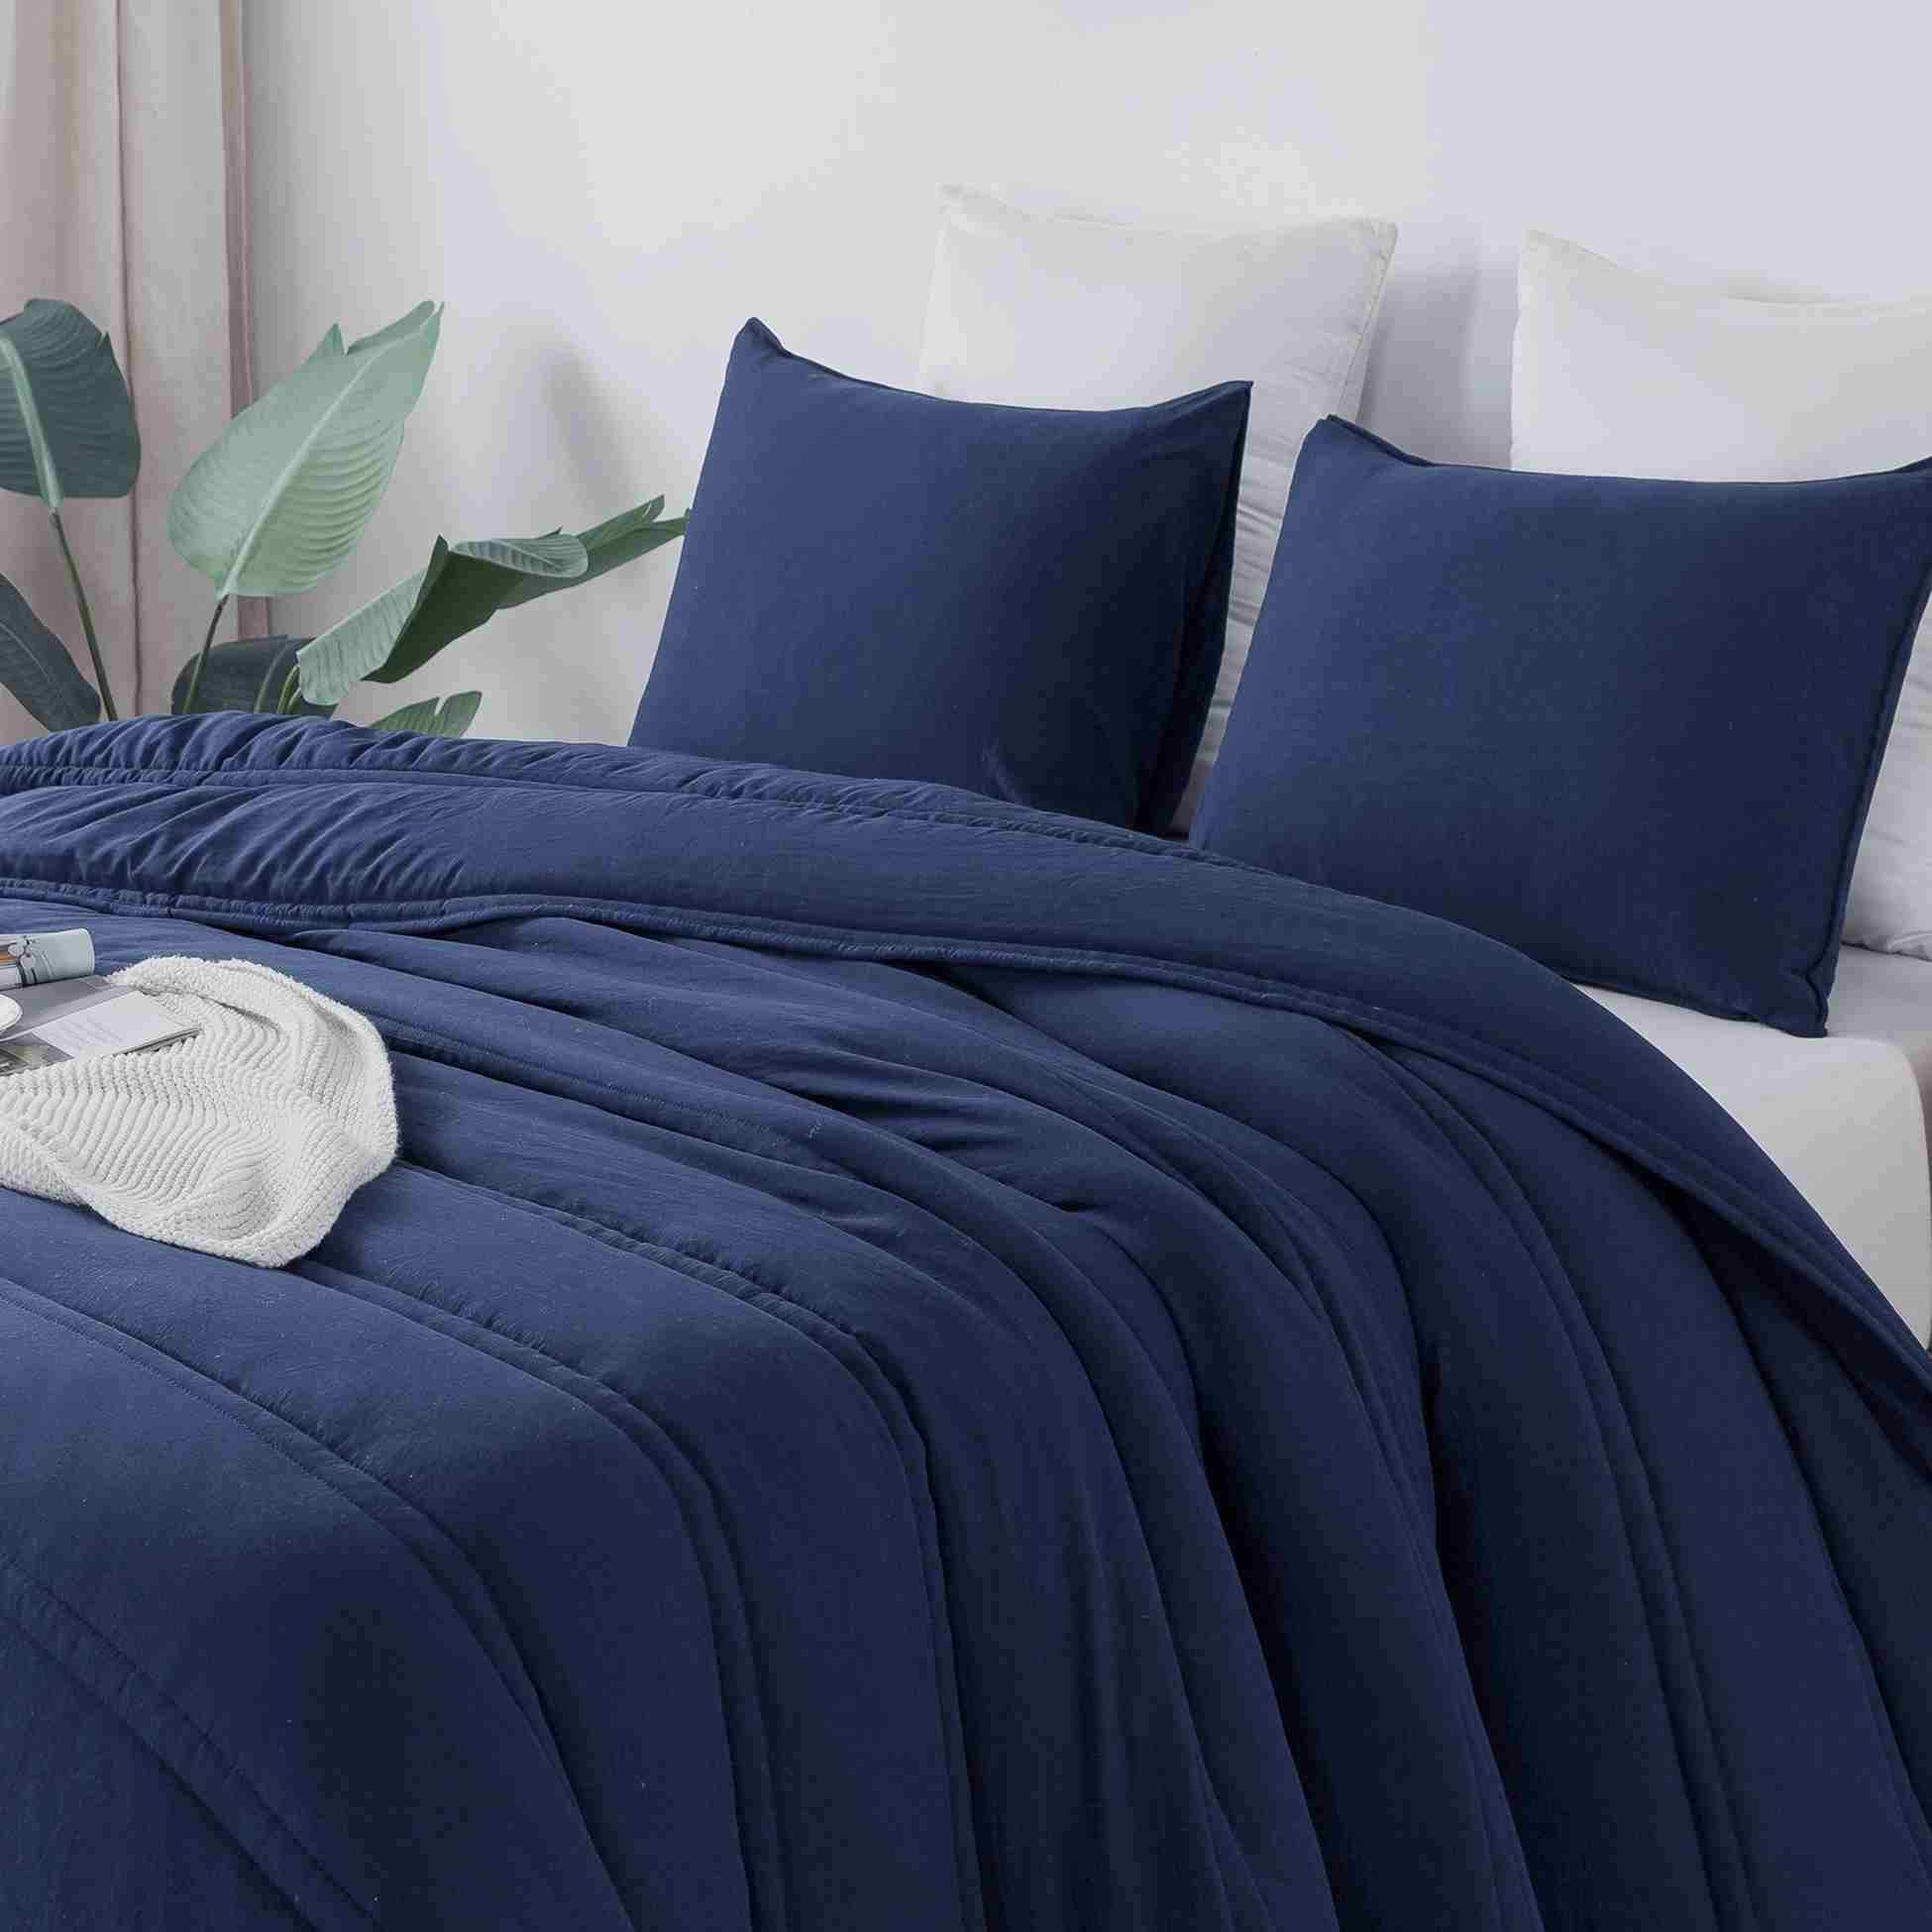 comforter-set-queen-size for cheap